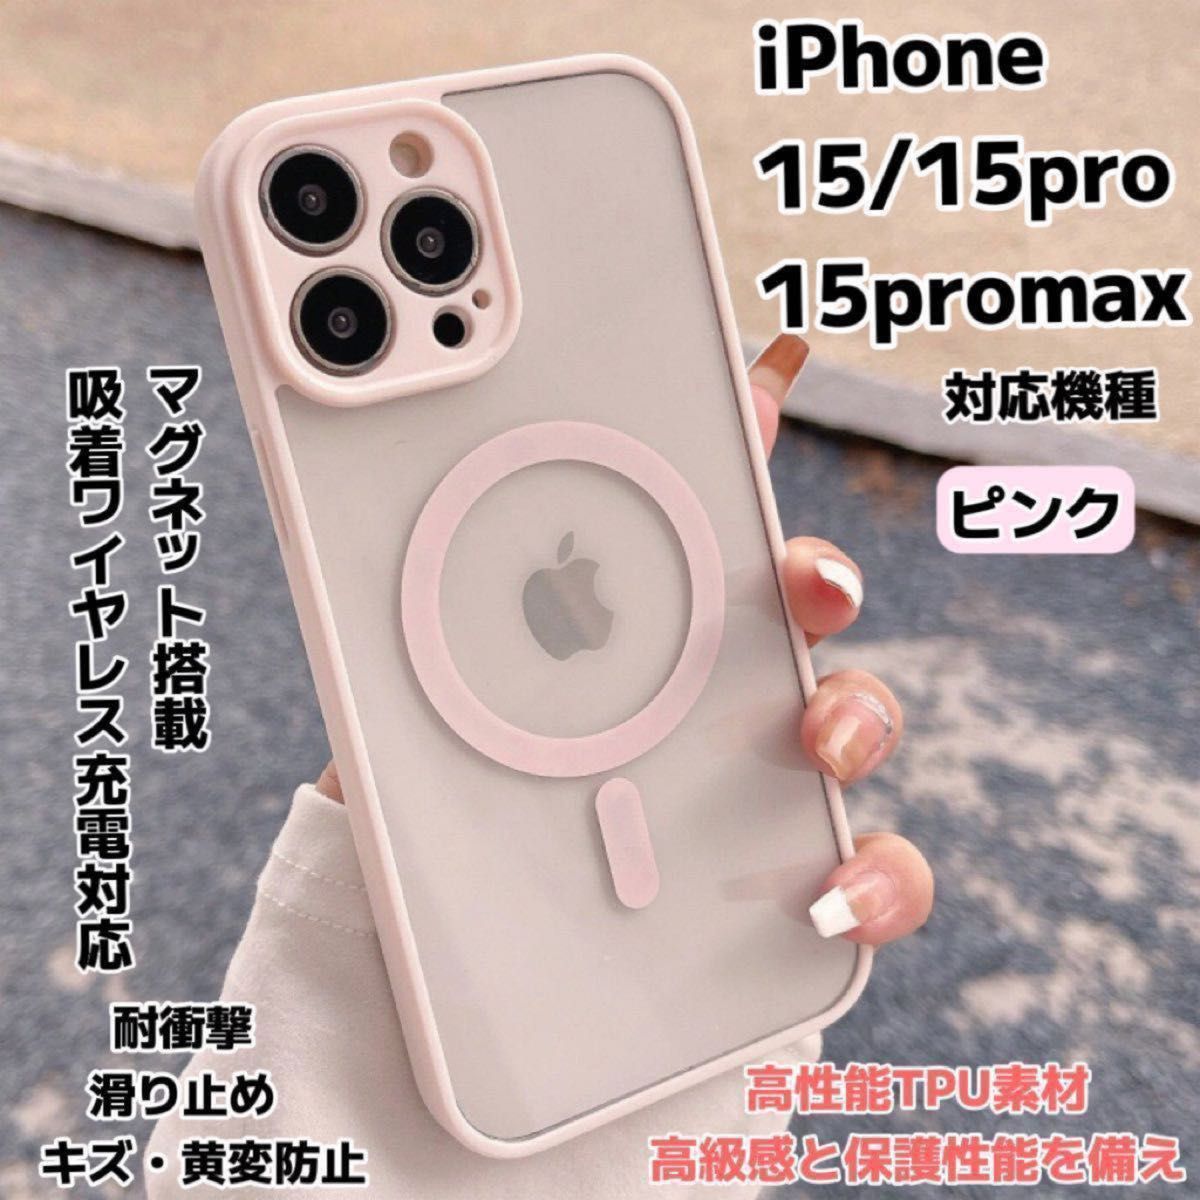 iPhone15 iPhone15pro iPhone15promax ケース マグセーフ  MagSafe 保護カバー 衝撃吸収